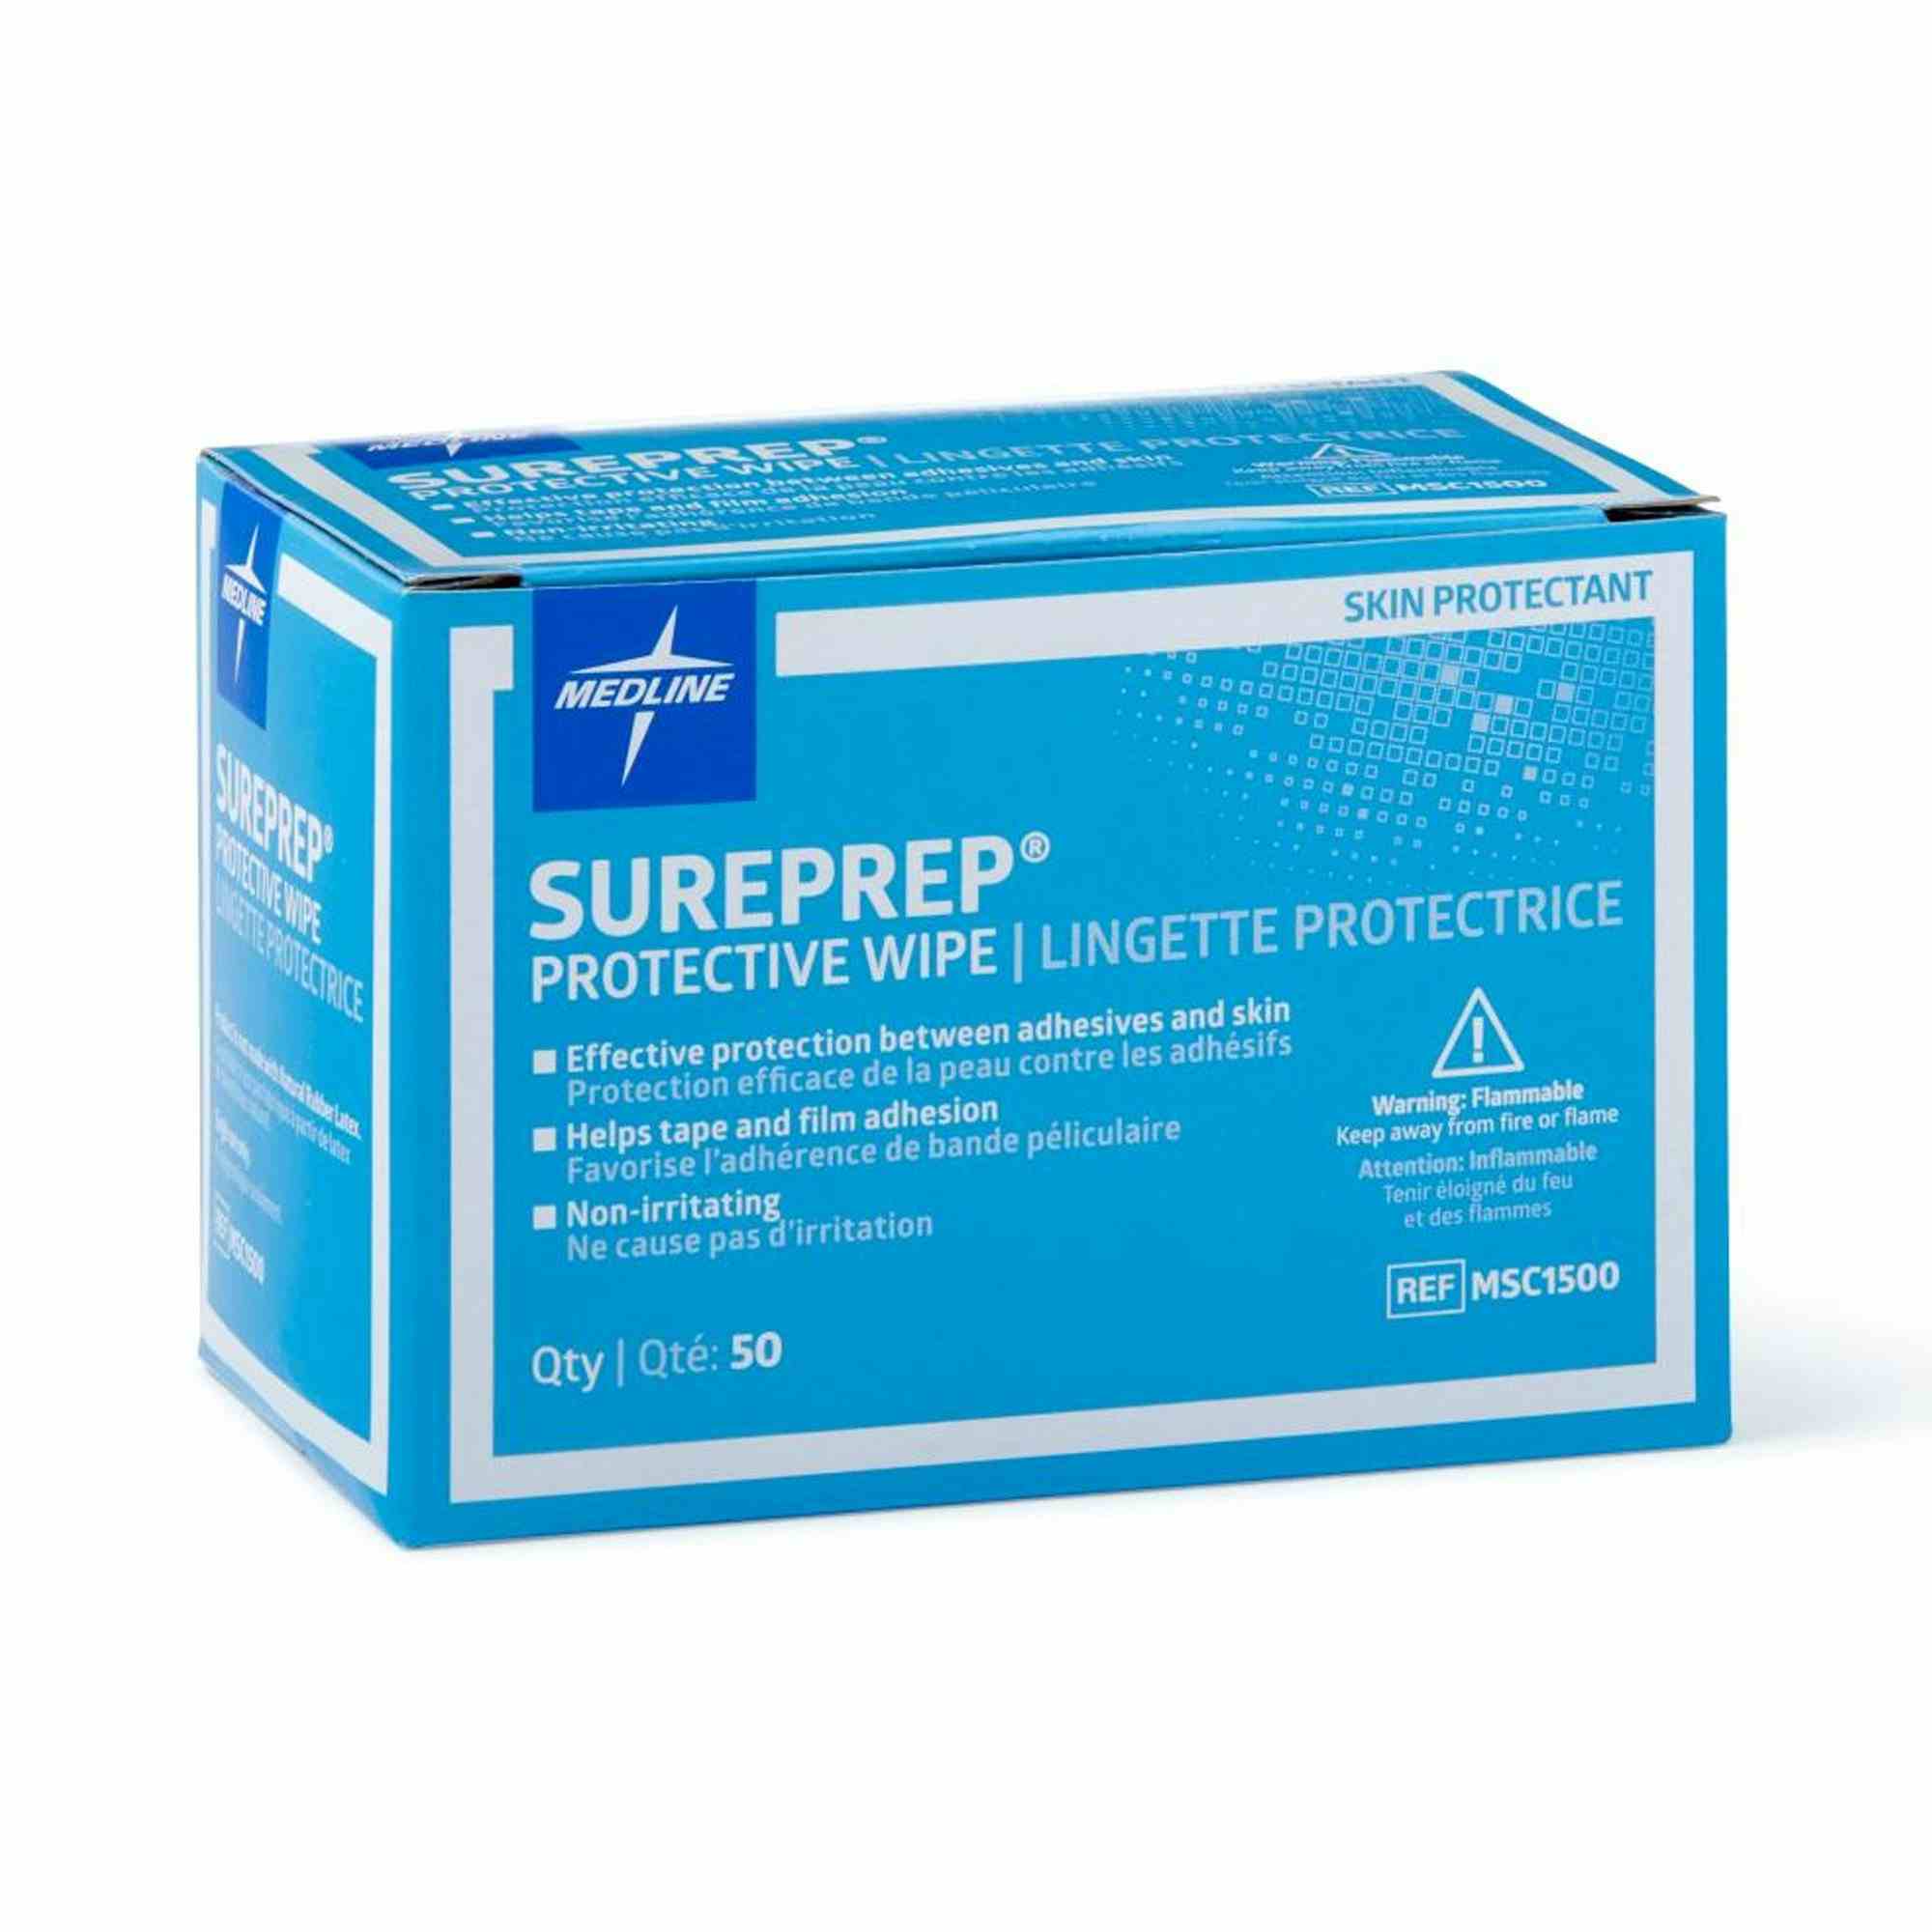 Medline Sureprep Protective Wipes, MSC1500, Box of 50